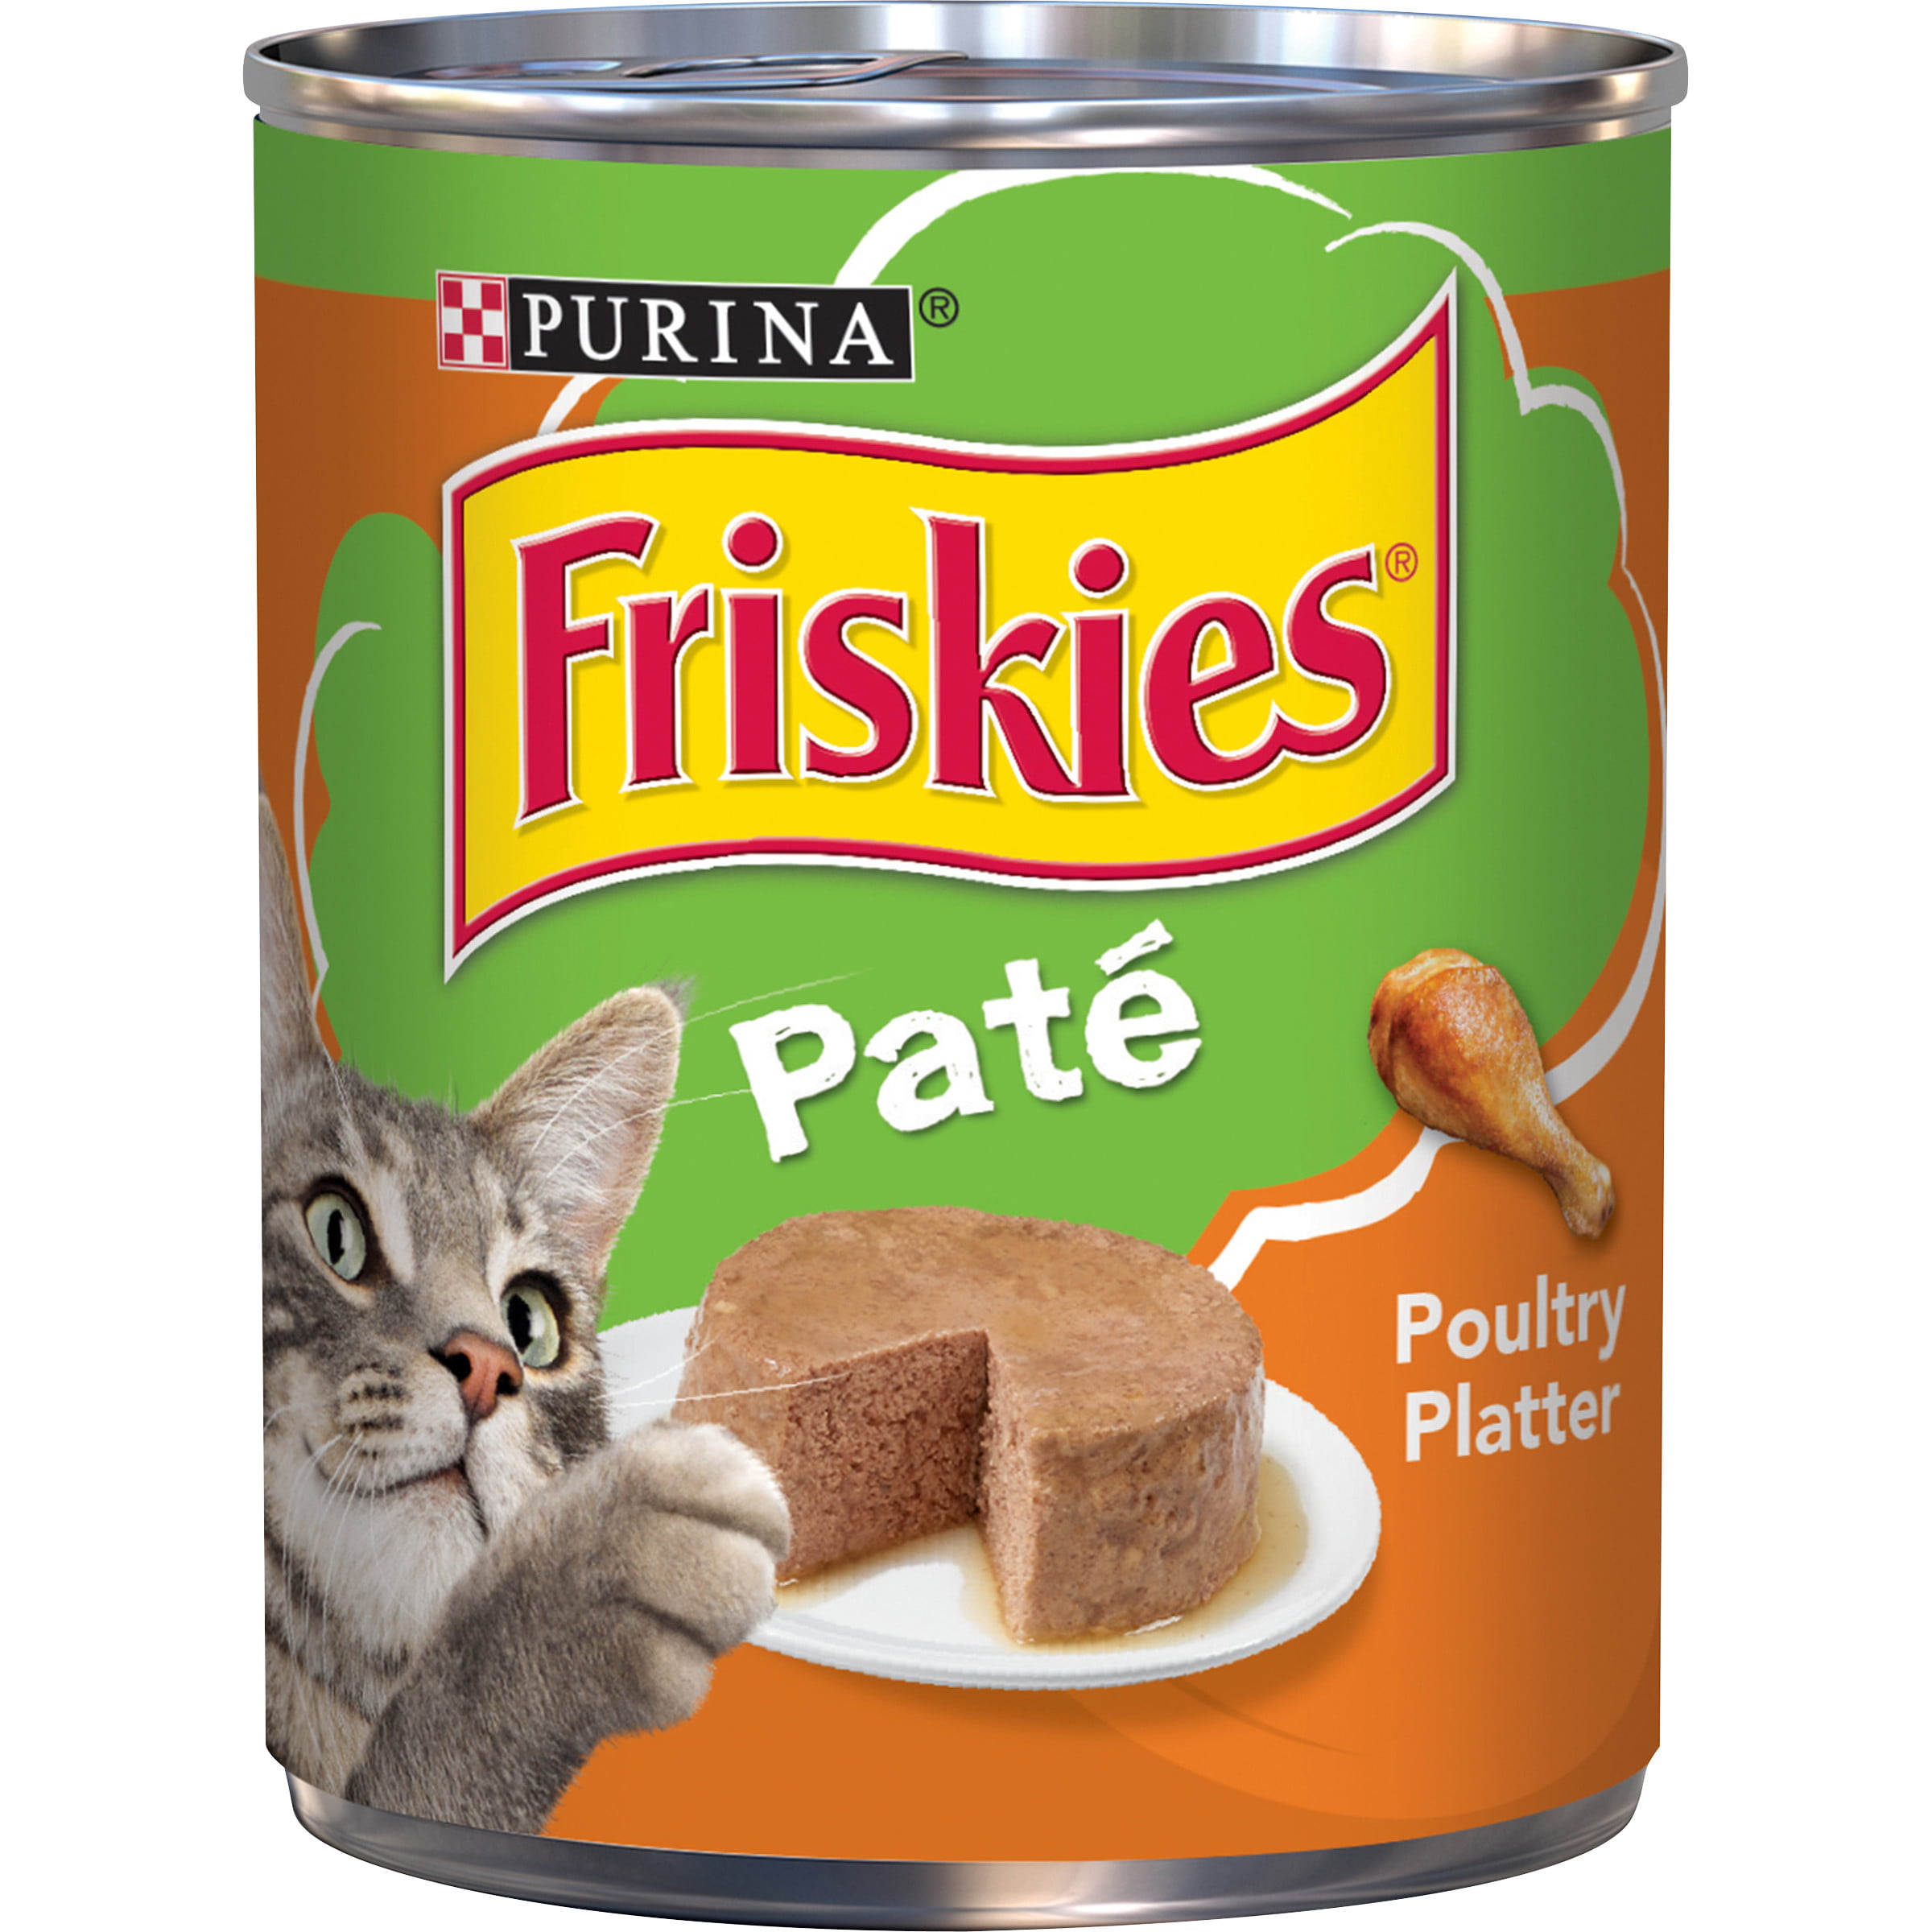 (12 Pack) Friskies Pate Wet Cat Food, Poultry Platter, 13 oz. Cans